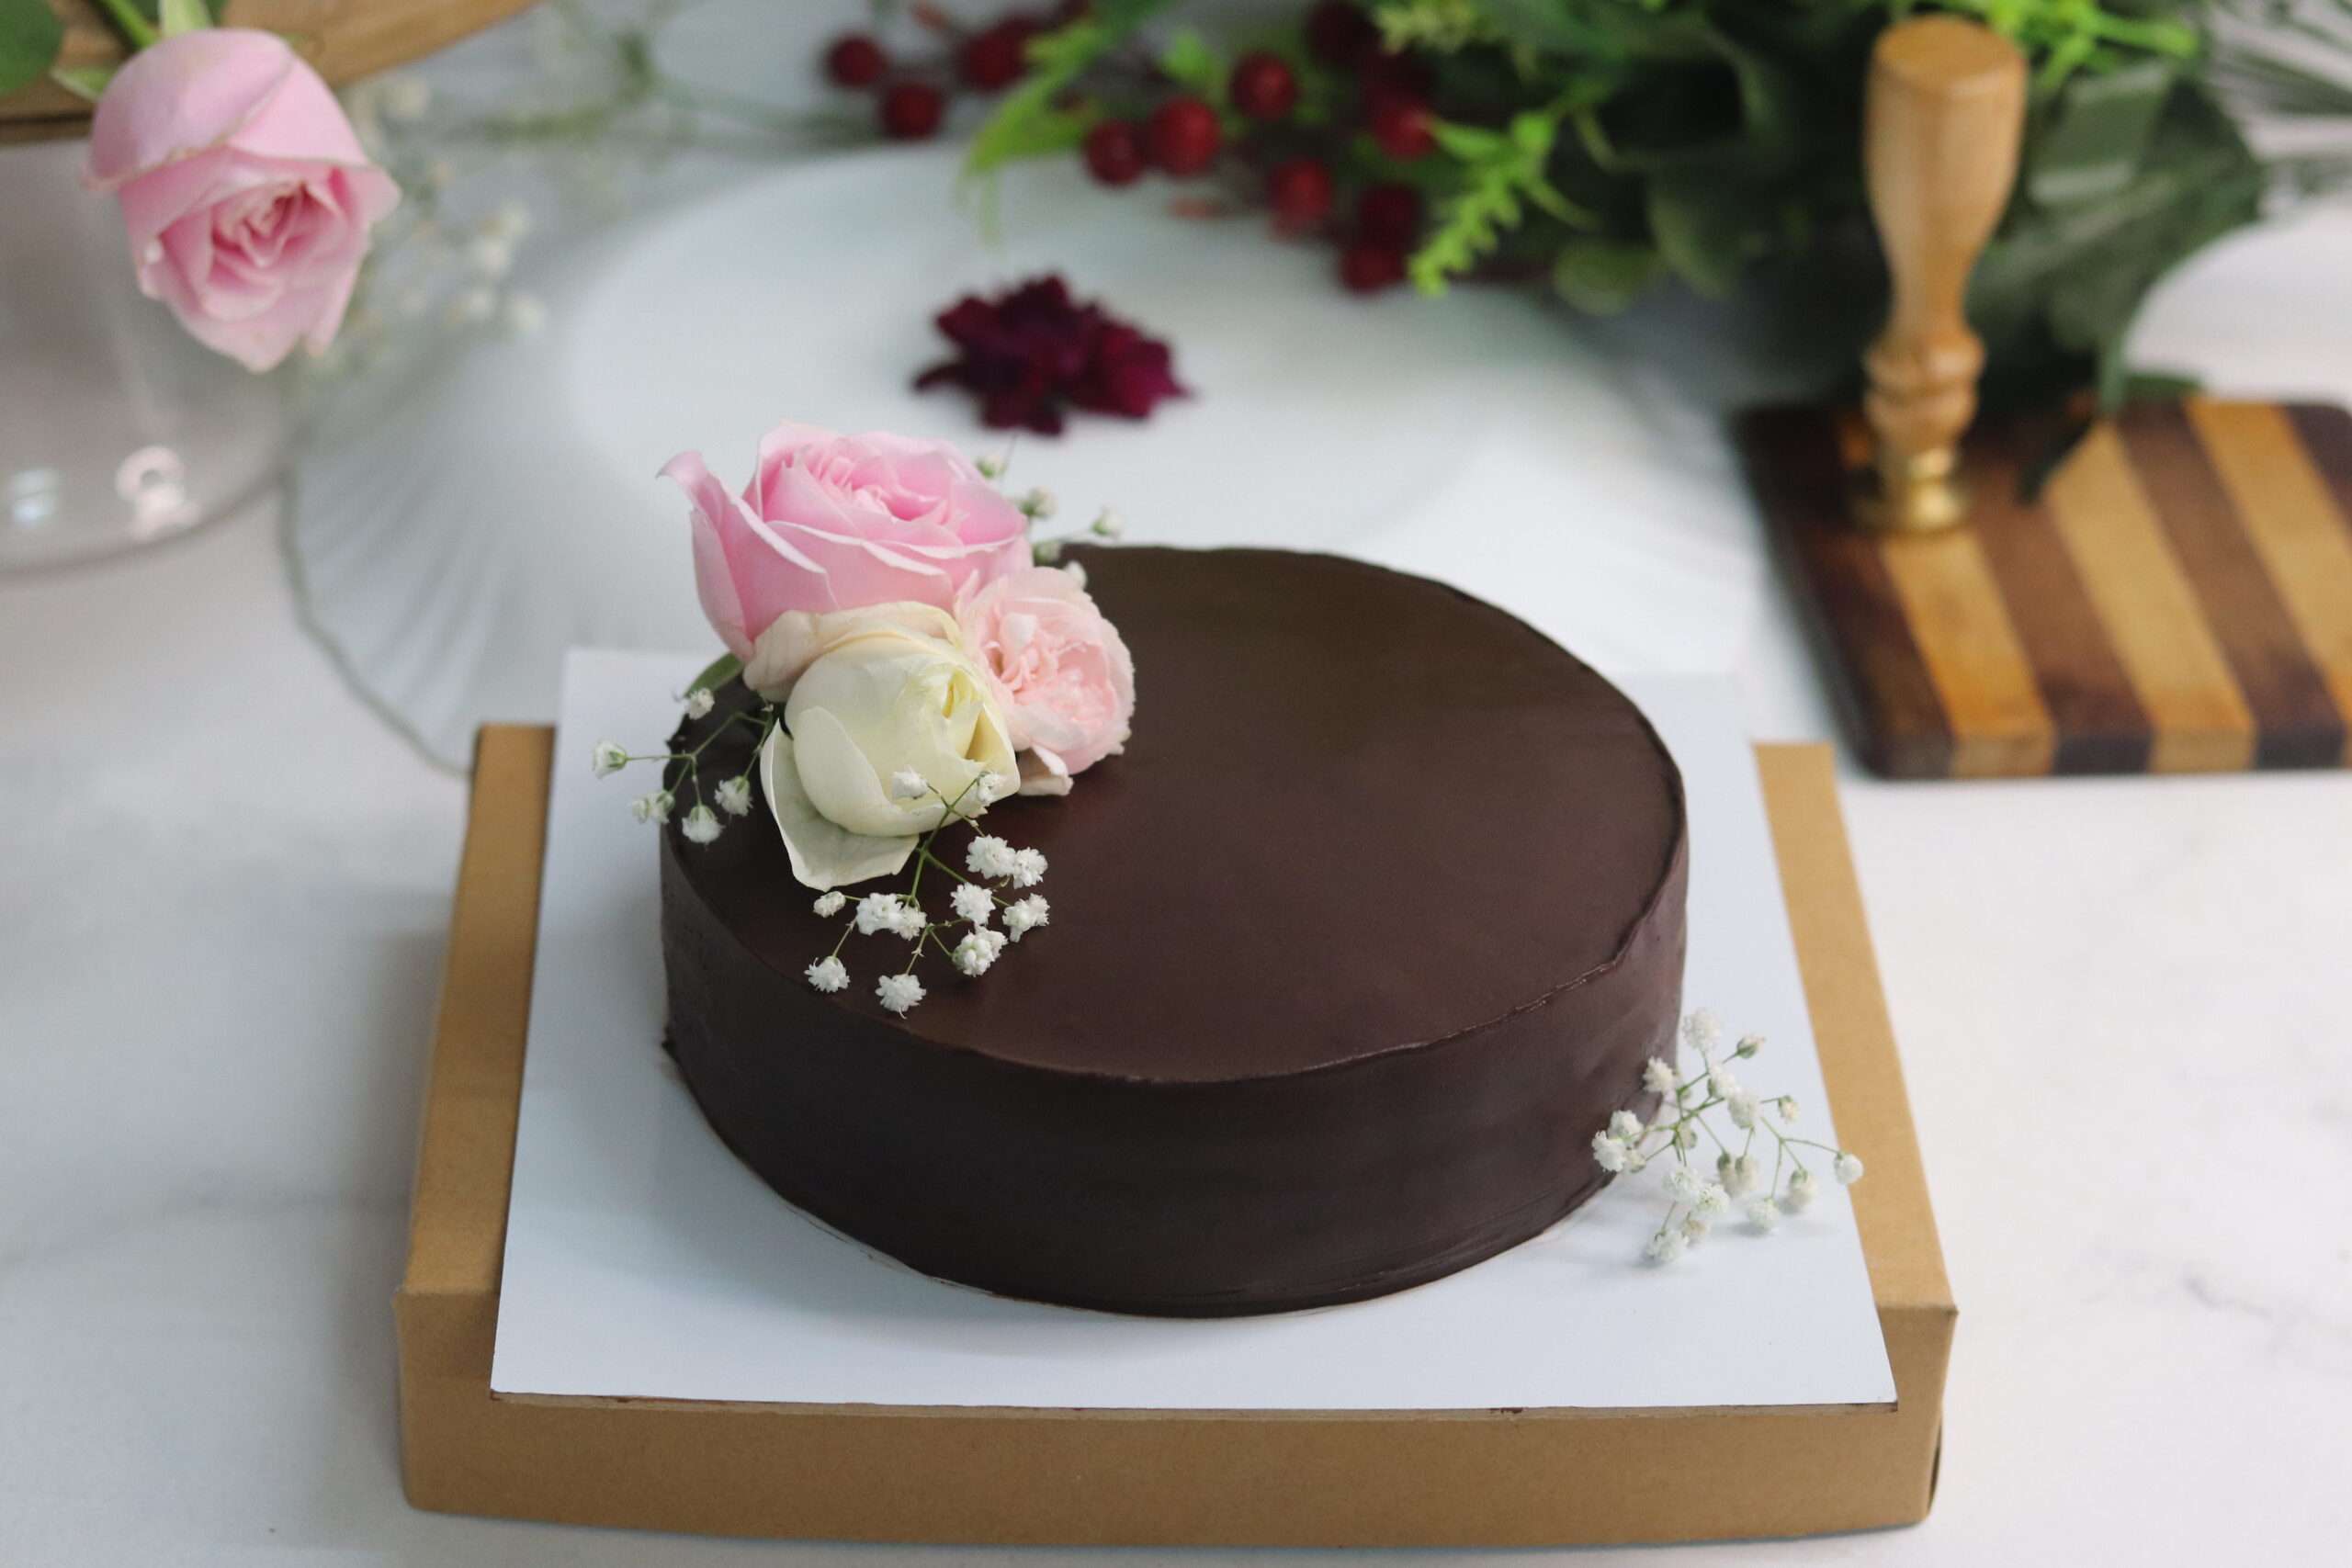 Mini Rose Cake Recipe | Mother's Day Treat - Jenny Cookies